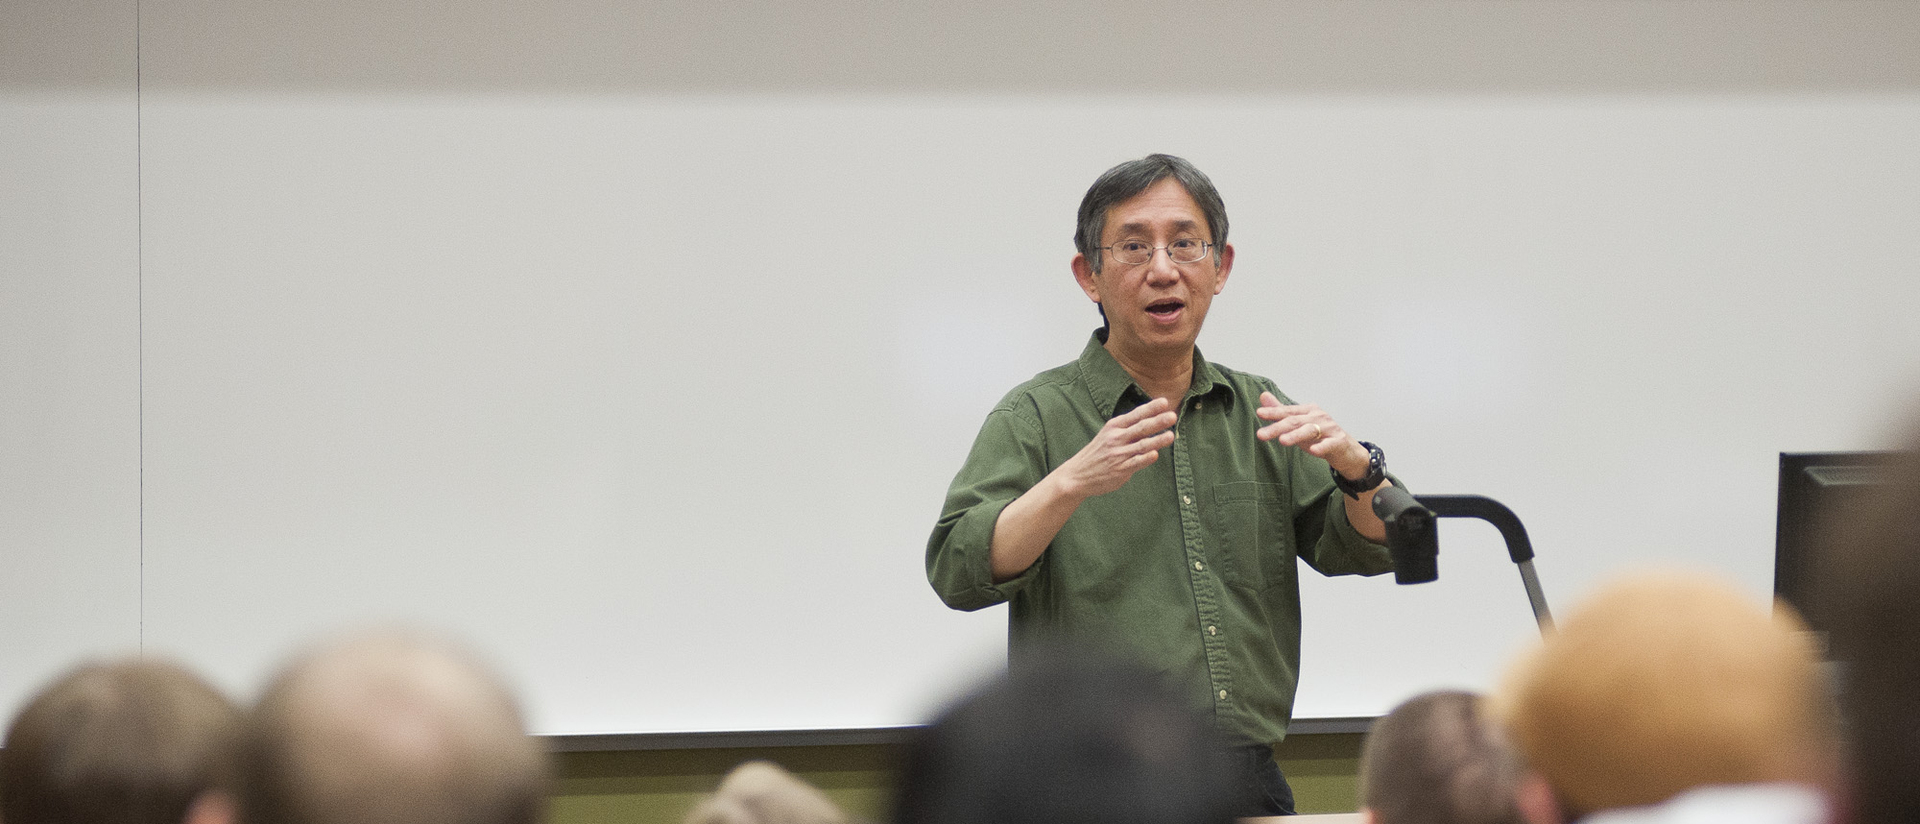 Professor Tan teaching Computer Science